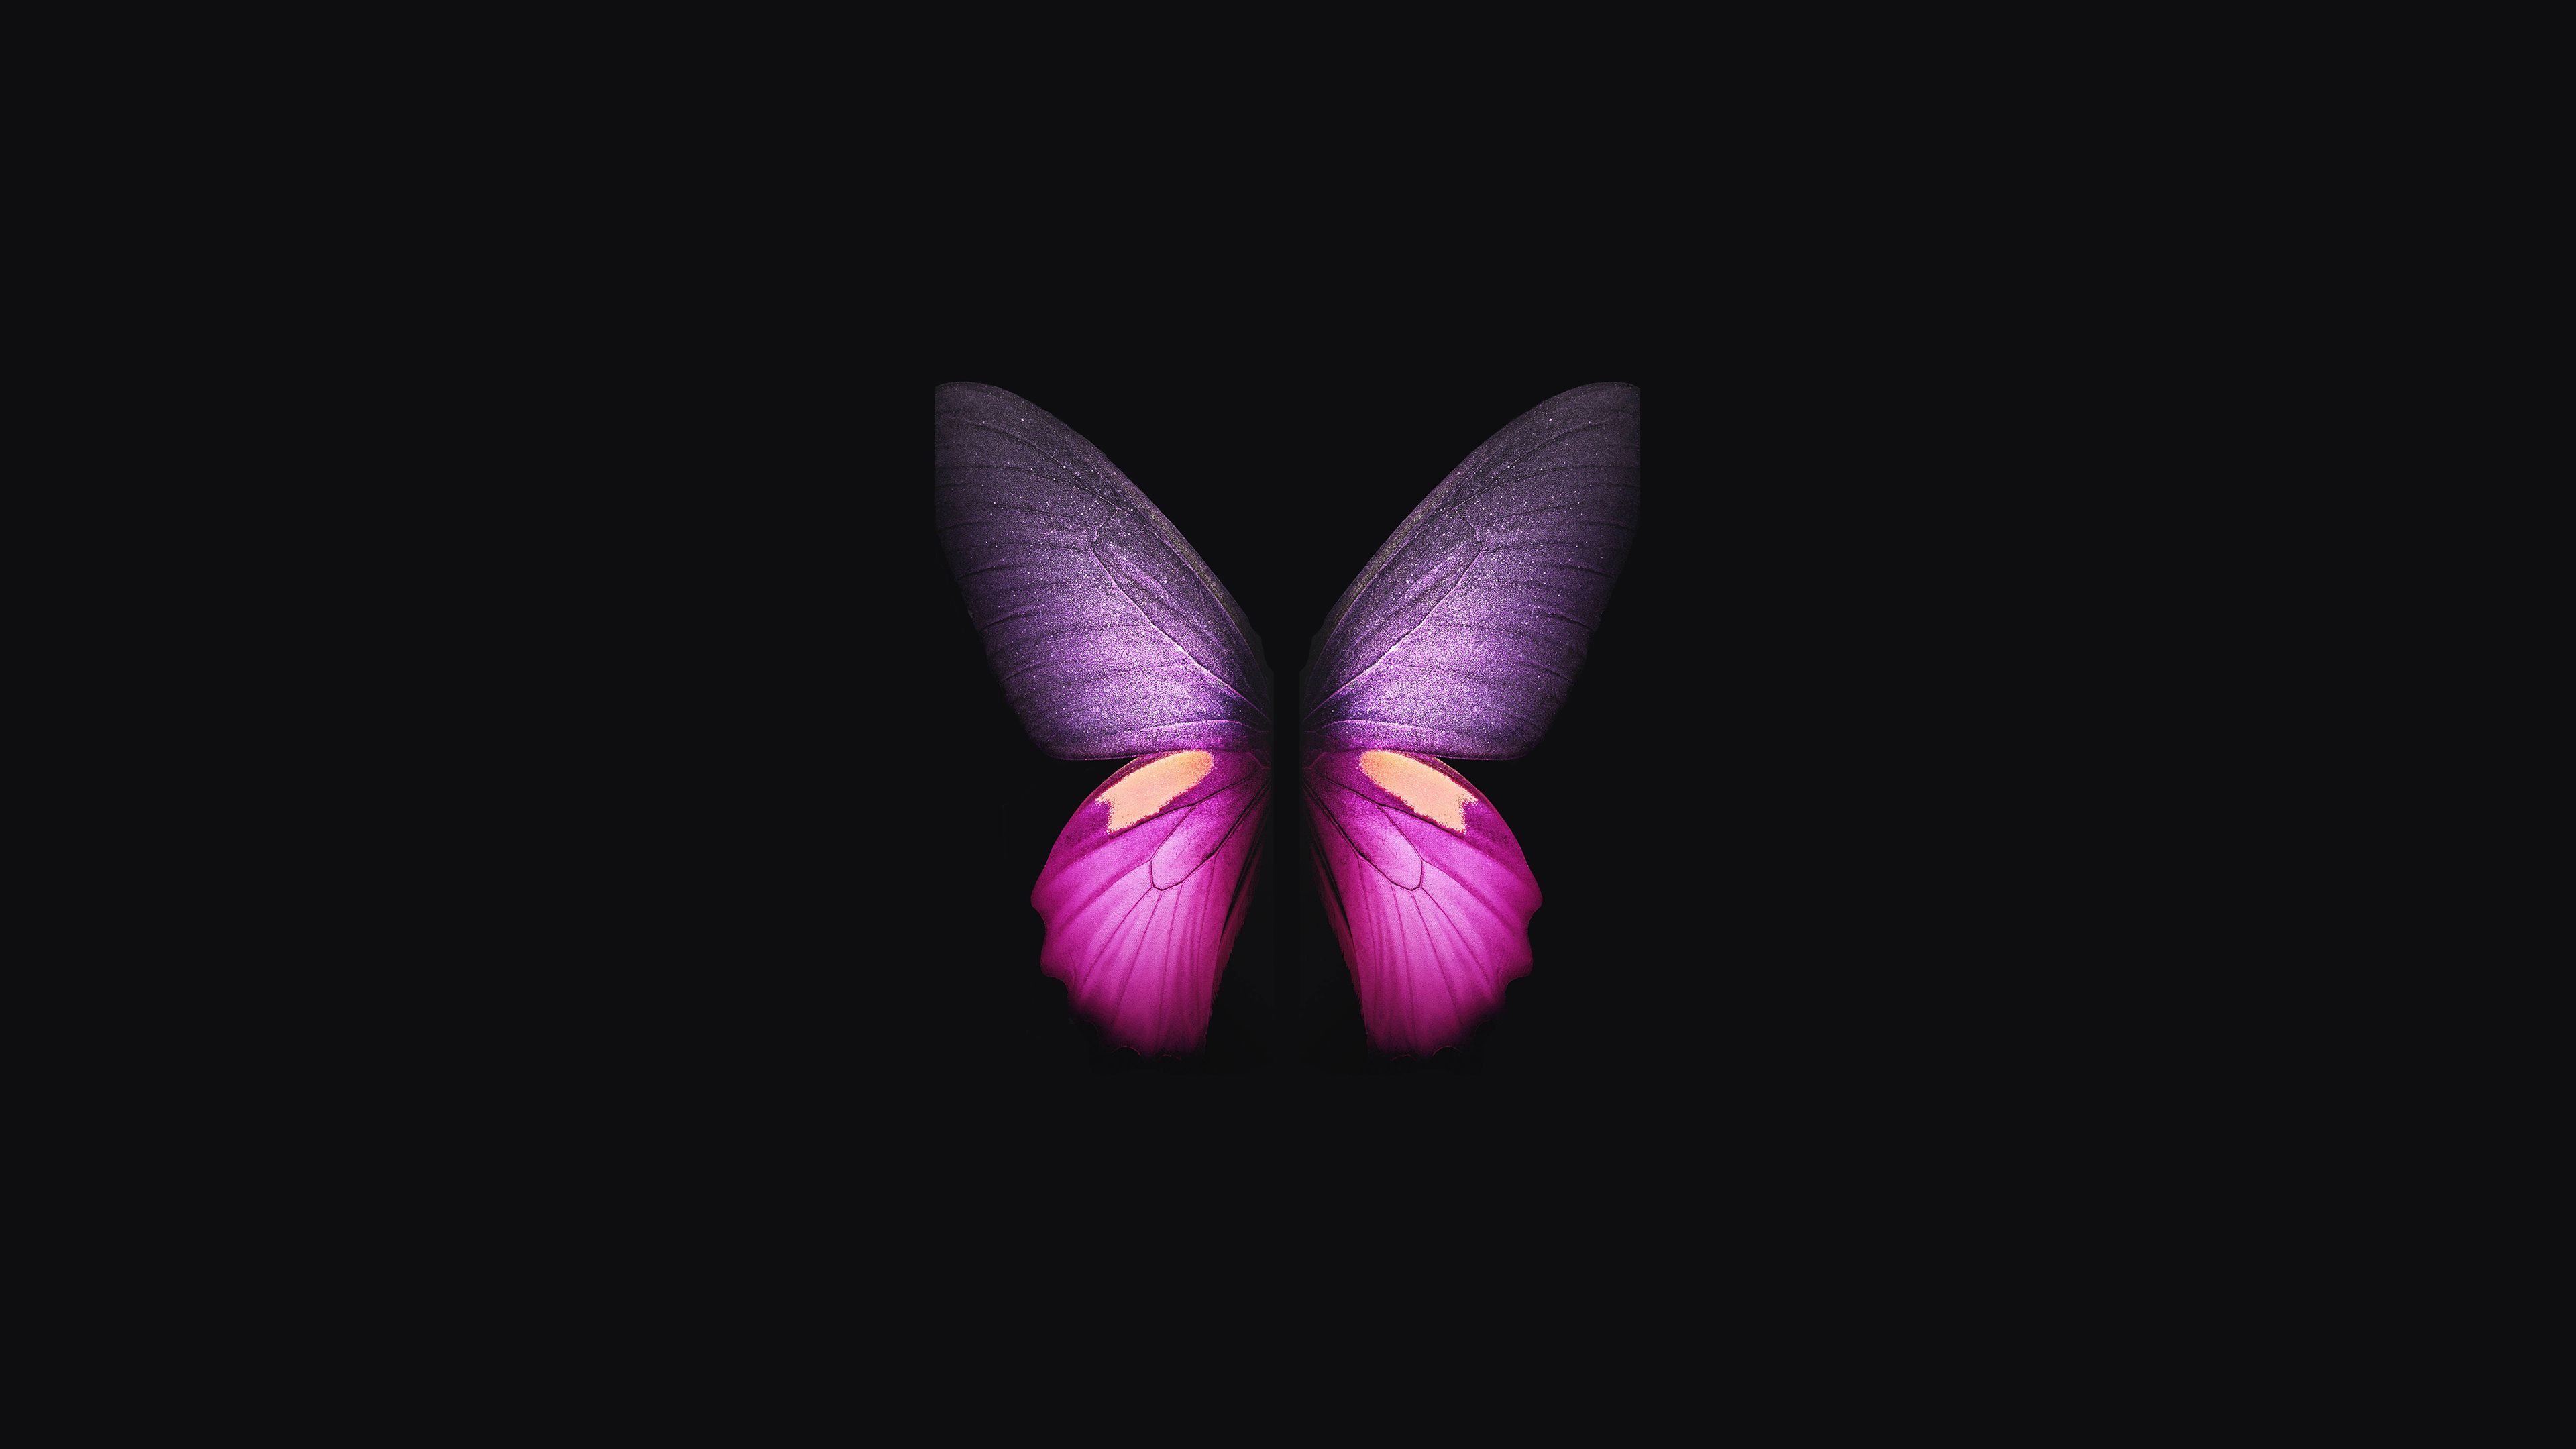 Samsung Galaxy Fold Butterfly, HD Artist, 4k Wallpaper, Image